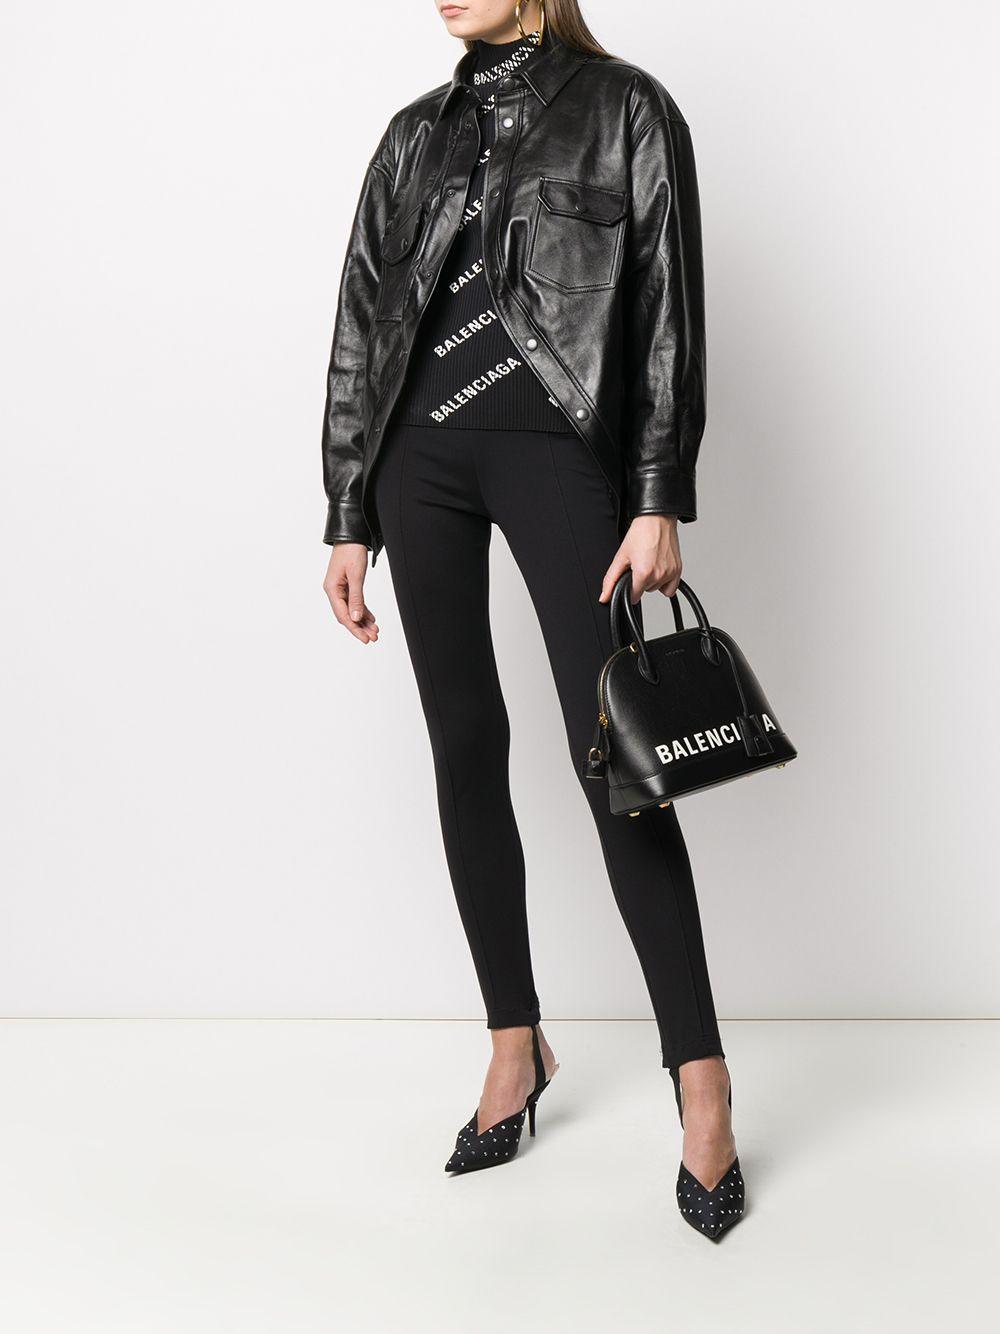 Balenciaga Ville Small Leather Handbag in Black | Lyst